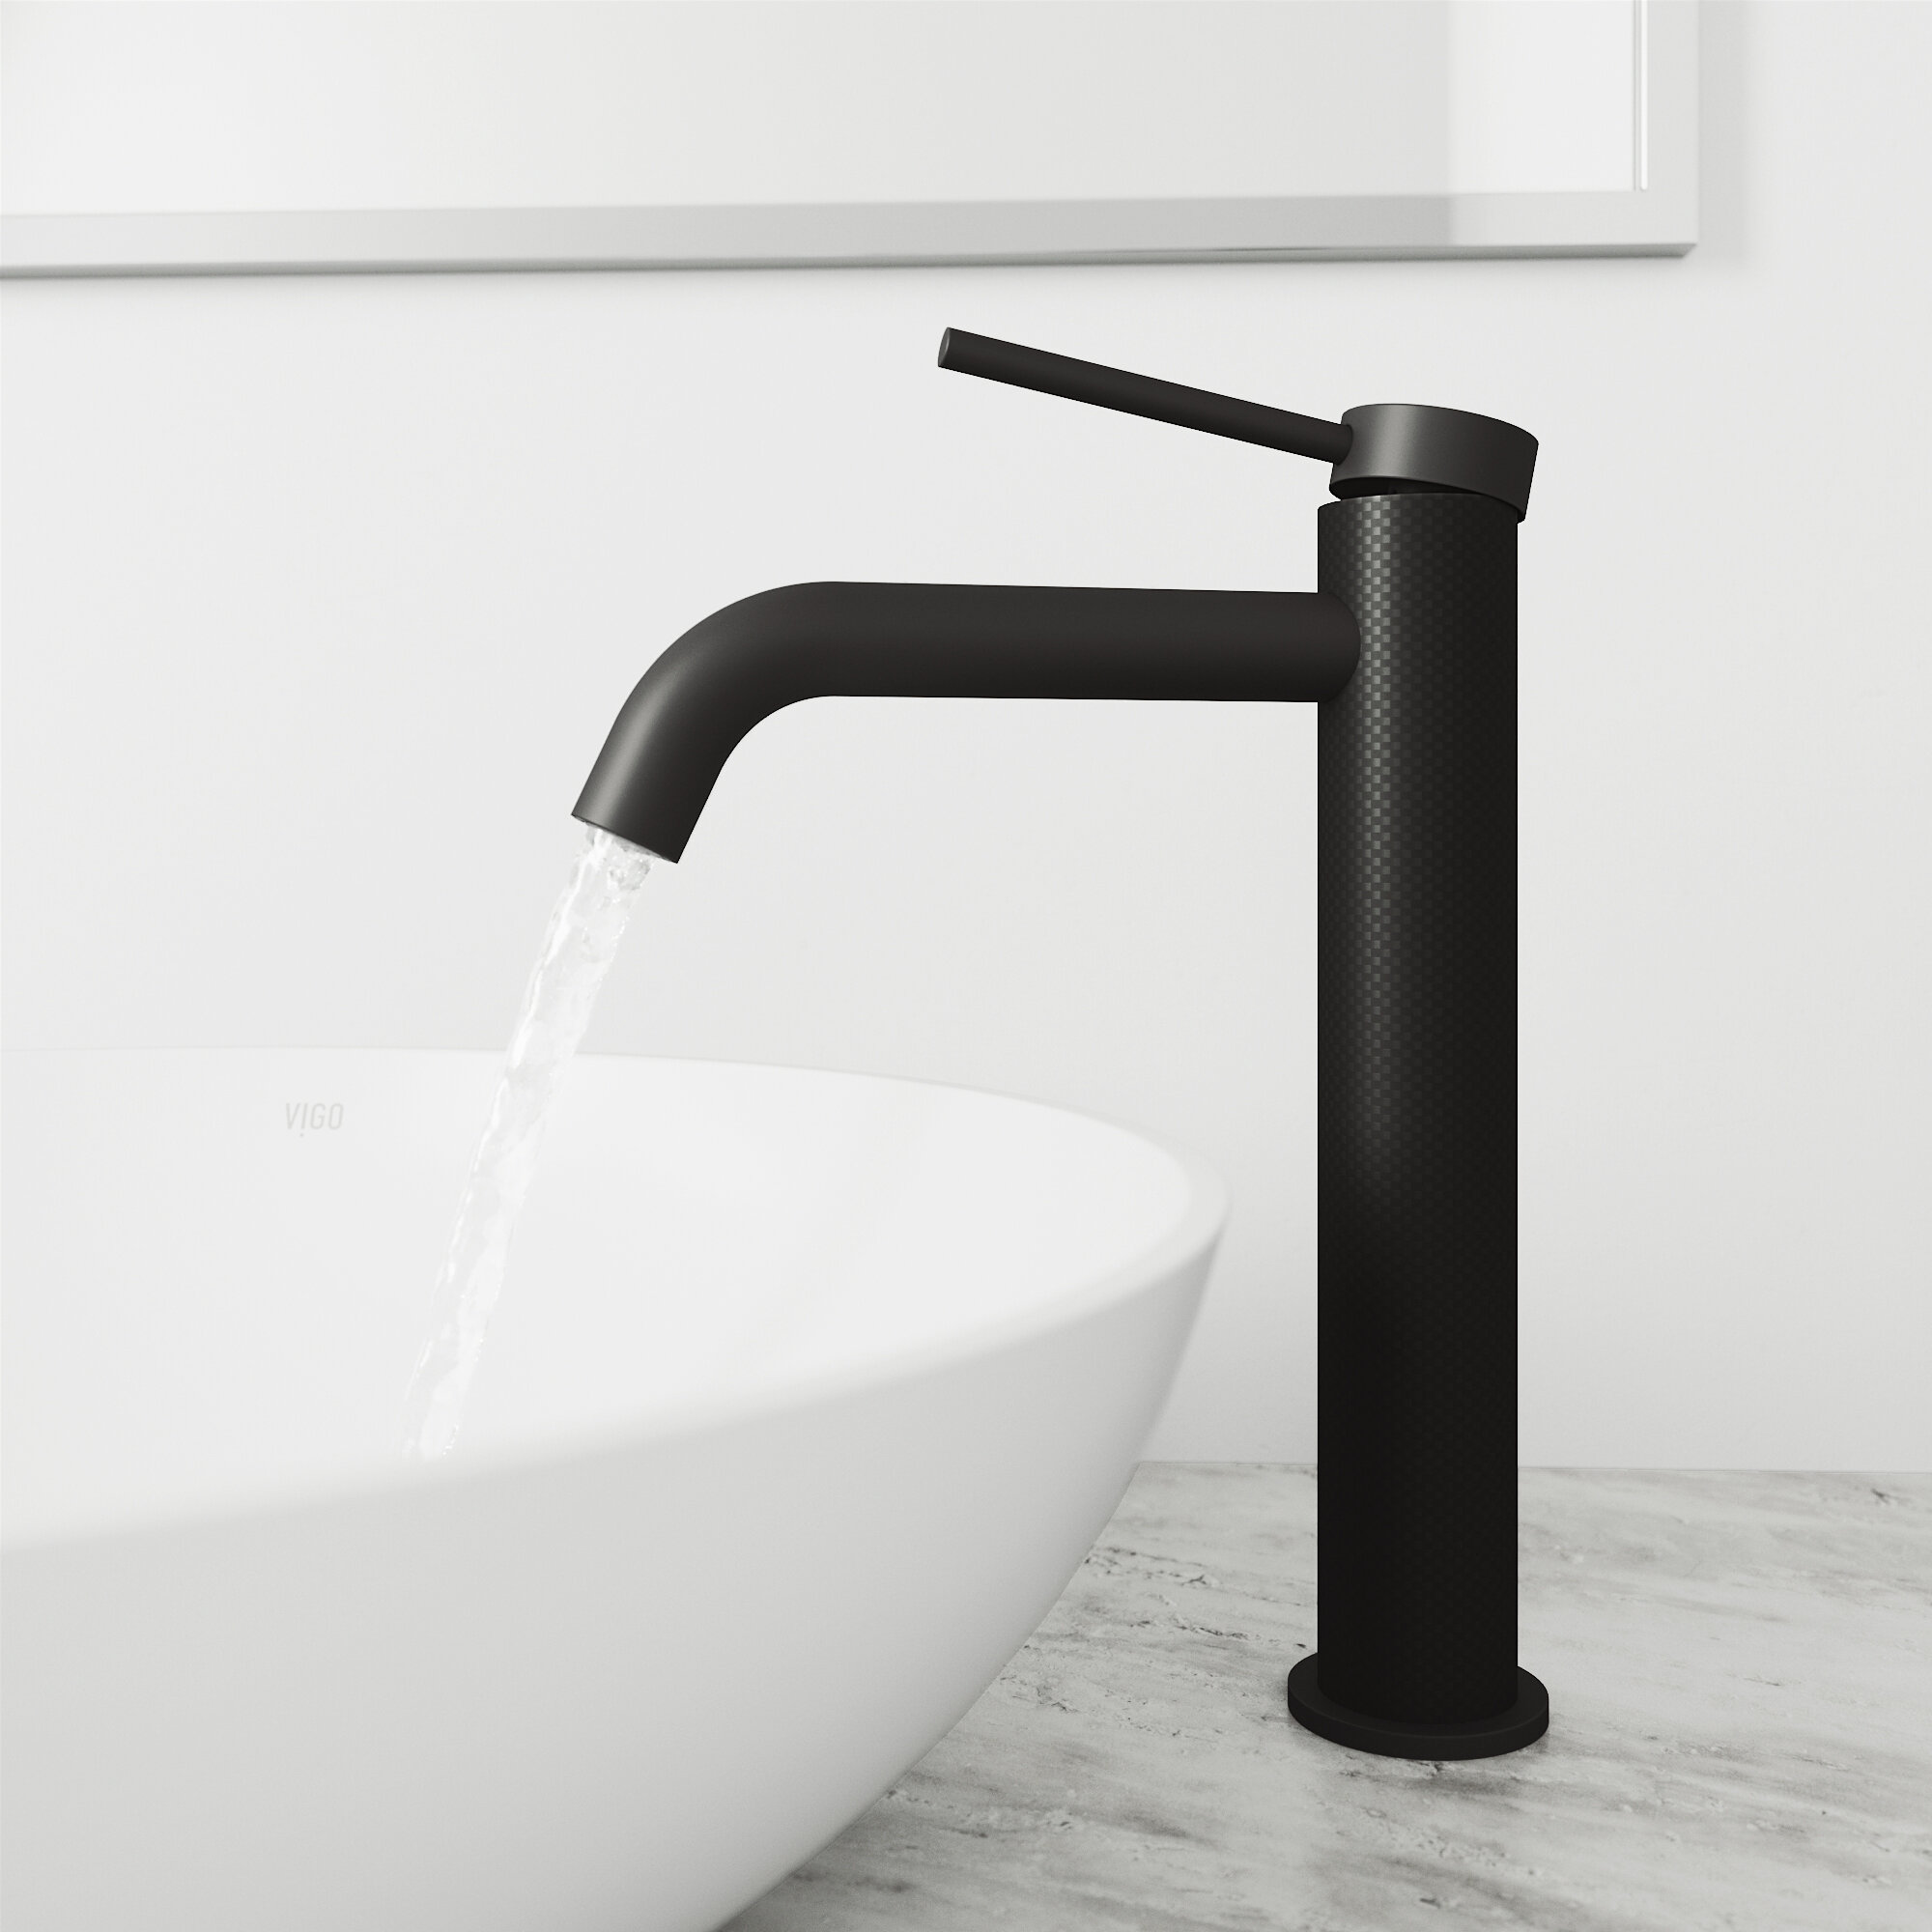 Vigo Lexington Vessel Sink Cfiber Bathroom Faucet Reviews Wayfair